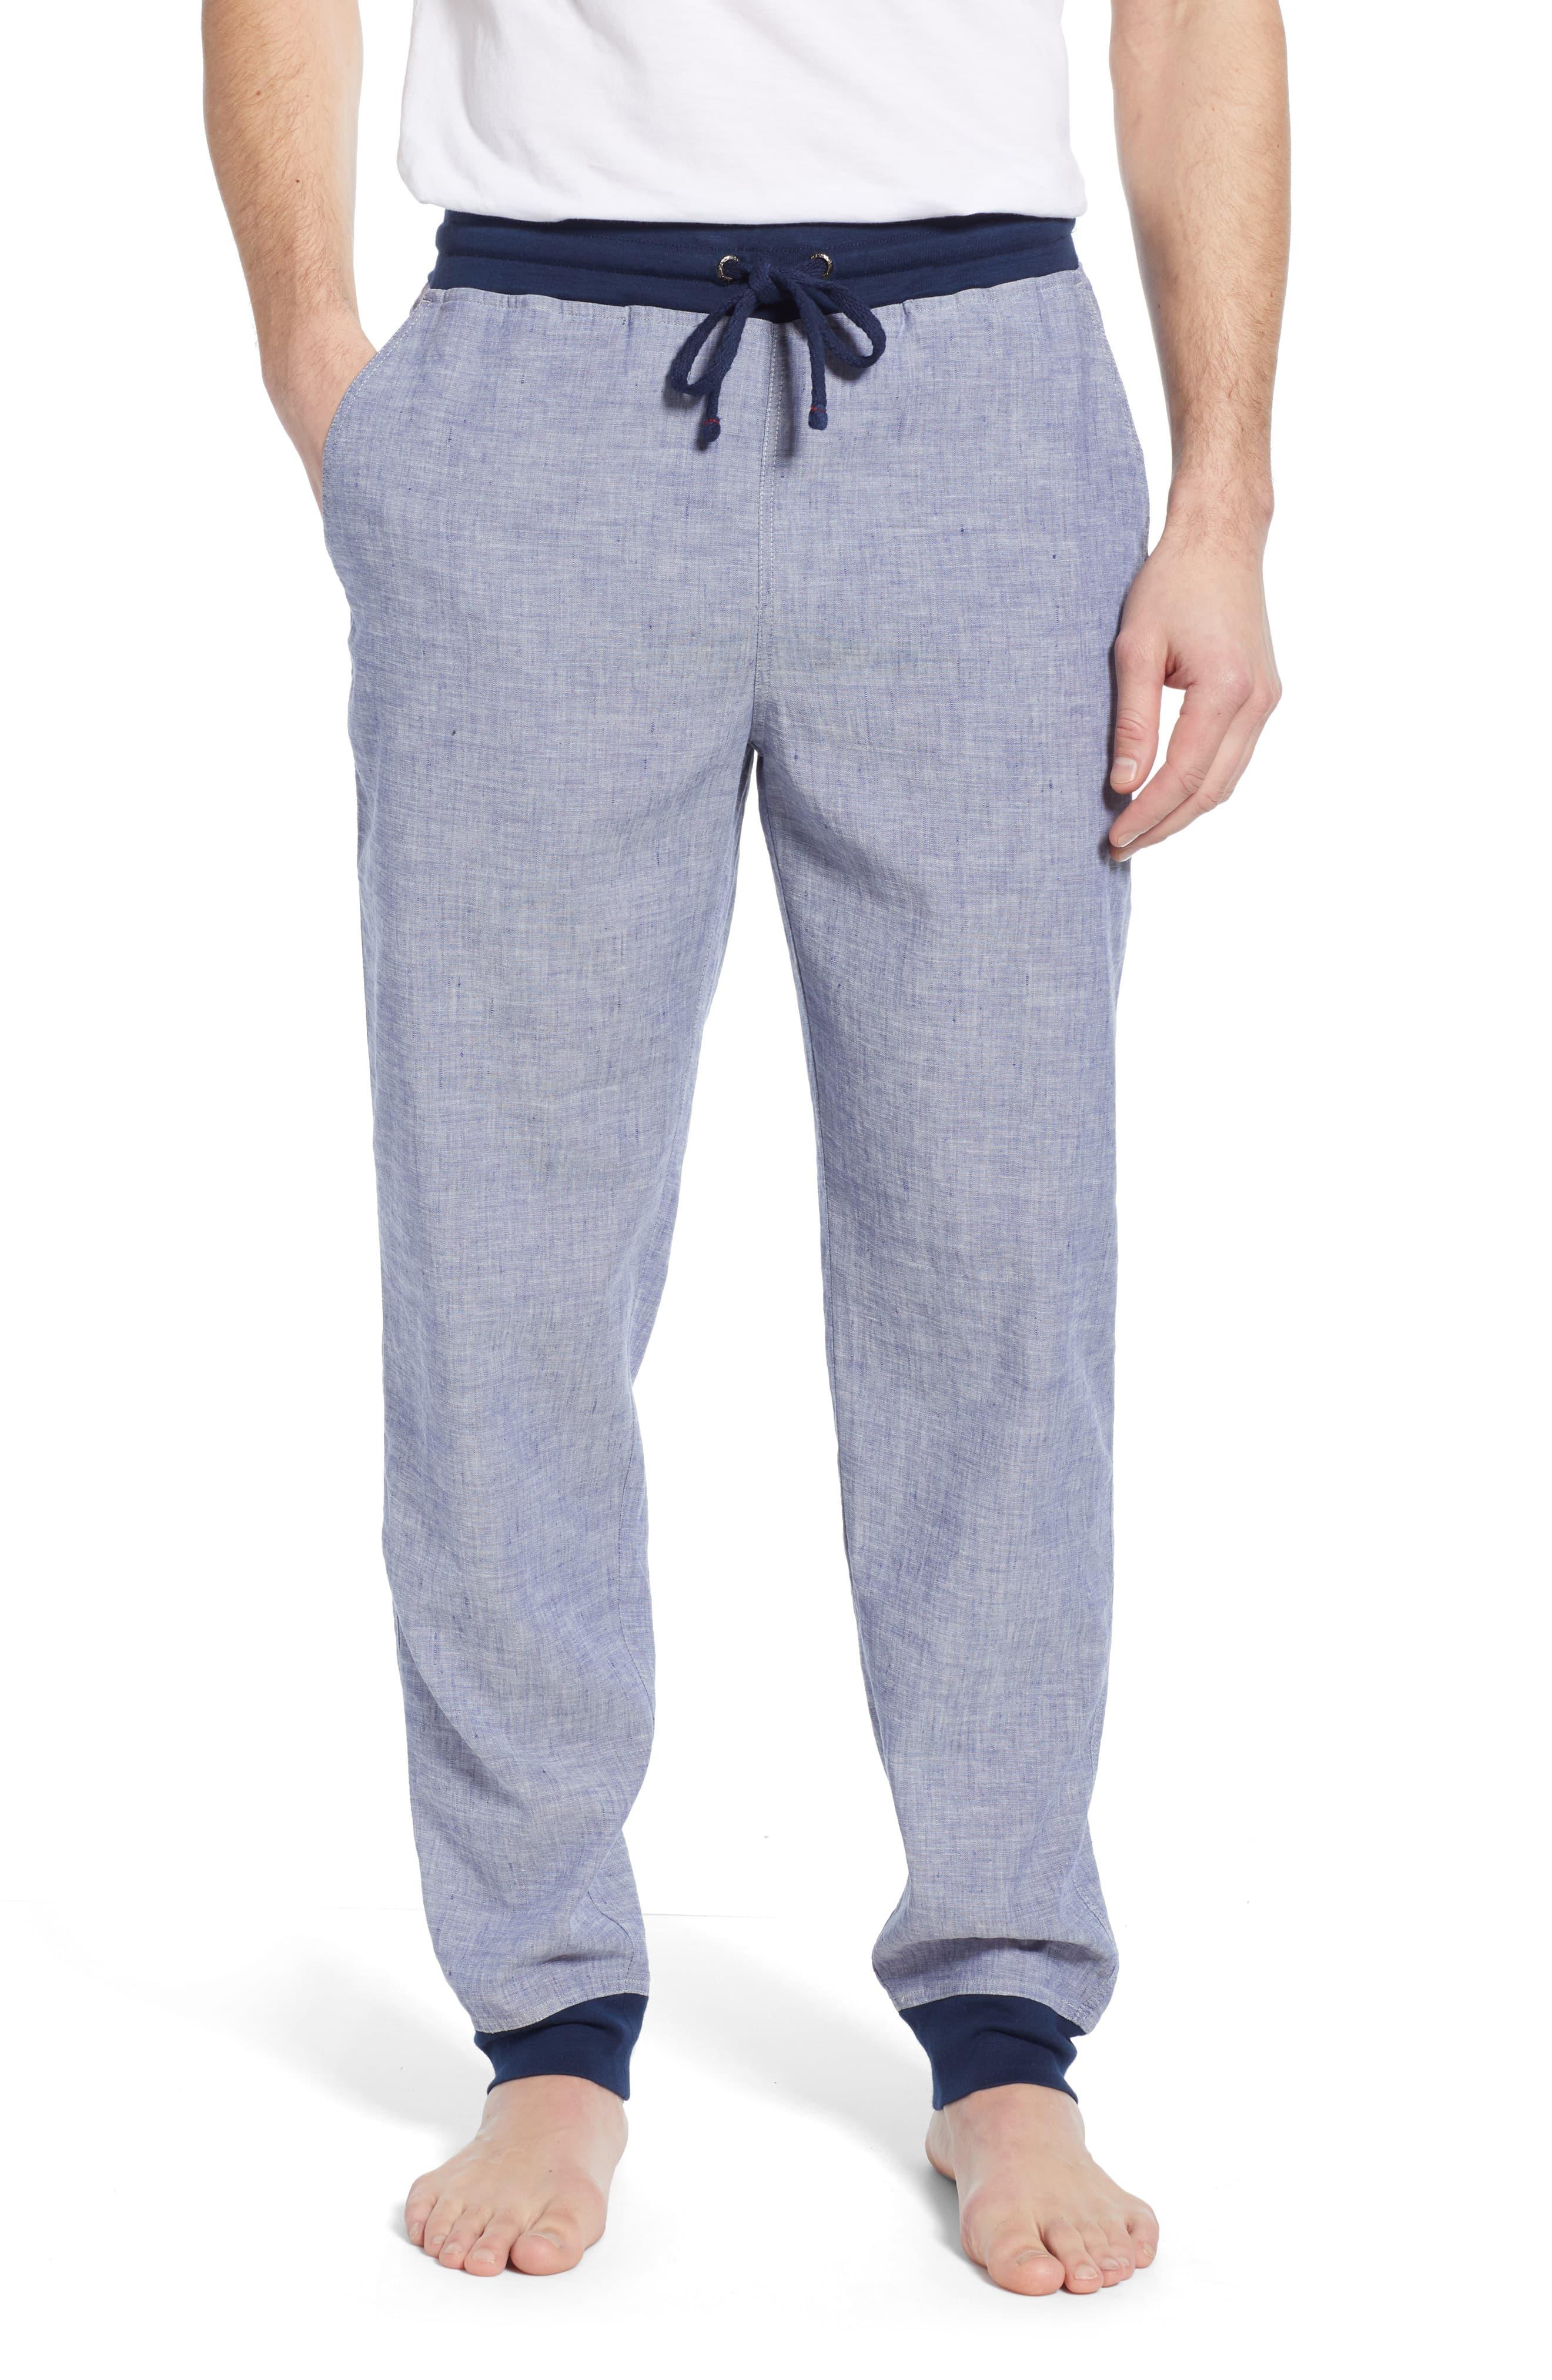 Daniel Buchler Heathered Linen Blend Lounge Pants in Blue for Men - Lyst